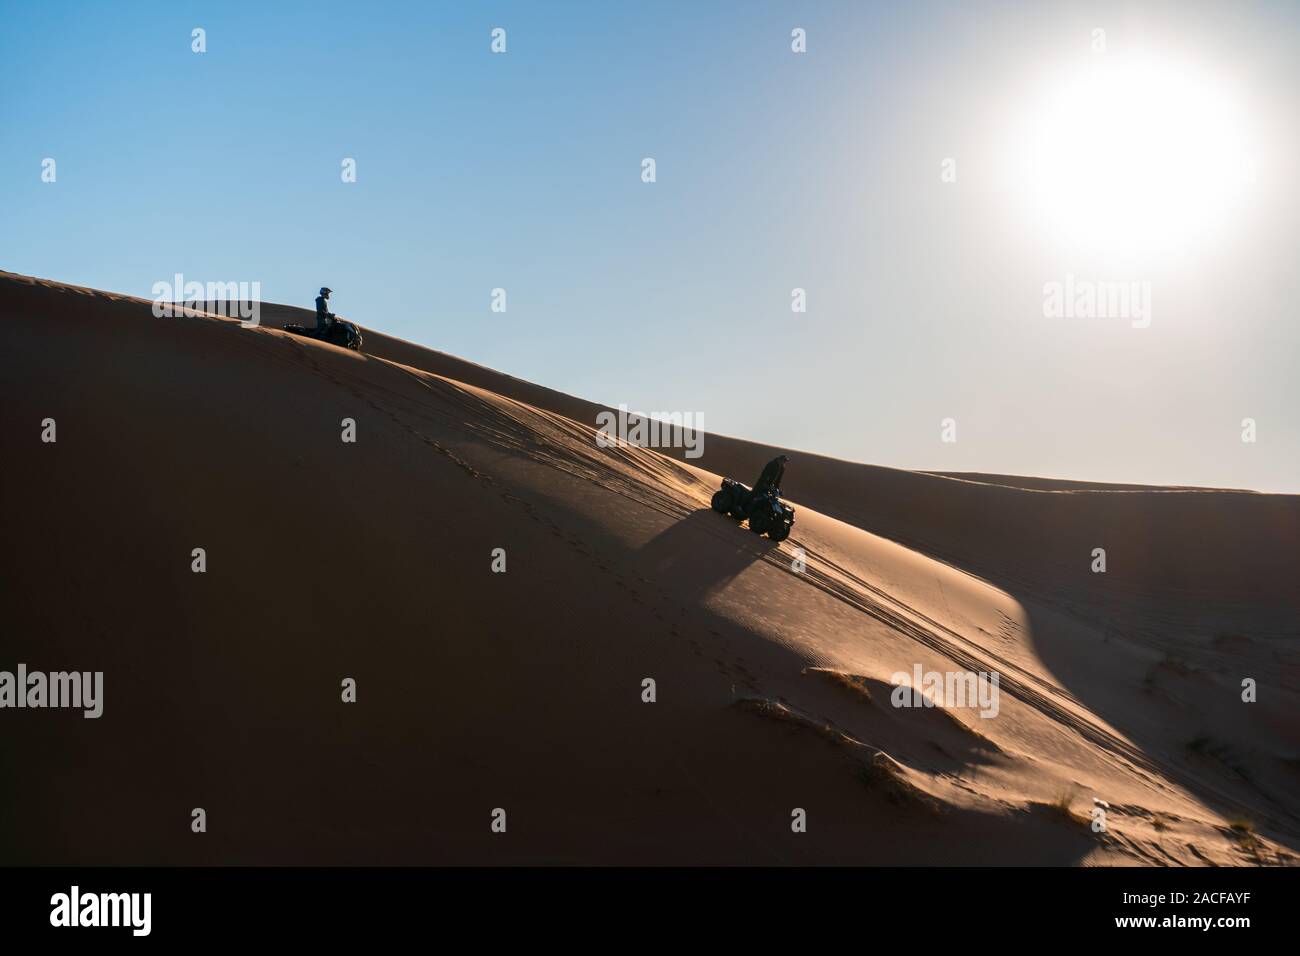 AVT quadrocycle on Sand dunes of Erg Chebbi in the Sahara Desert, Morocco Stock Photo